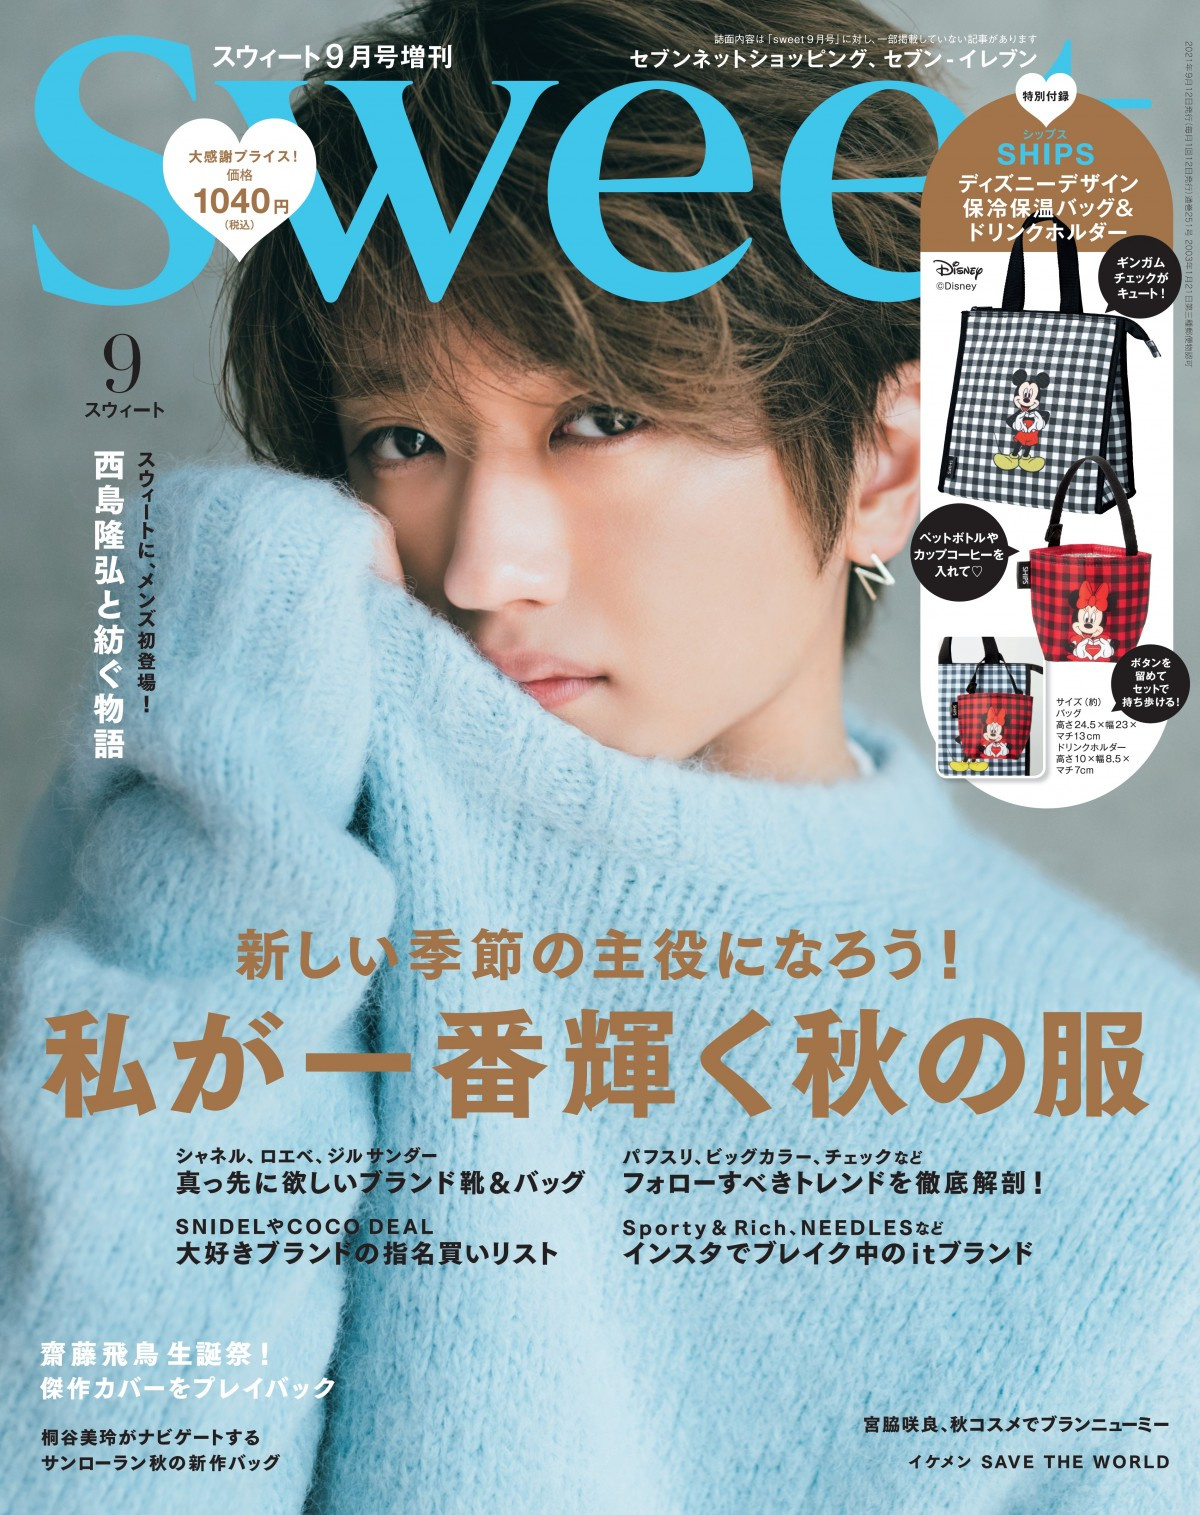 Sweet 編集部 Nissy表紙号の梱包を謝罪 初の男性表紙 も付録で隠れて写真見えず Oricon News